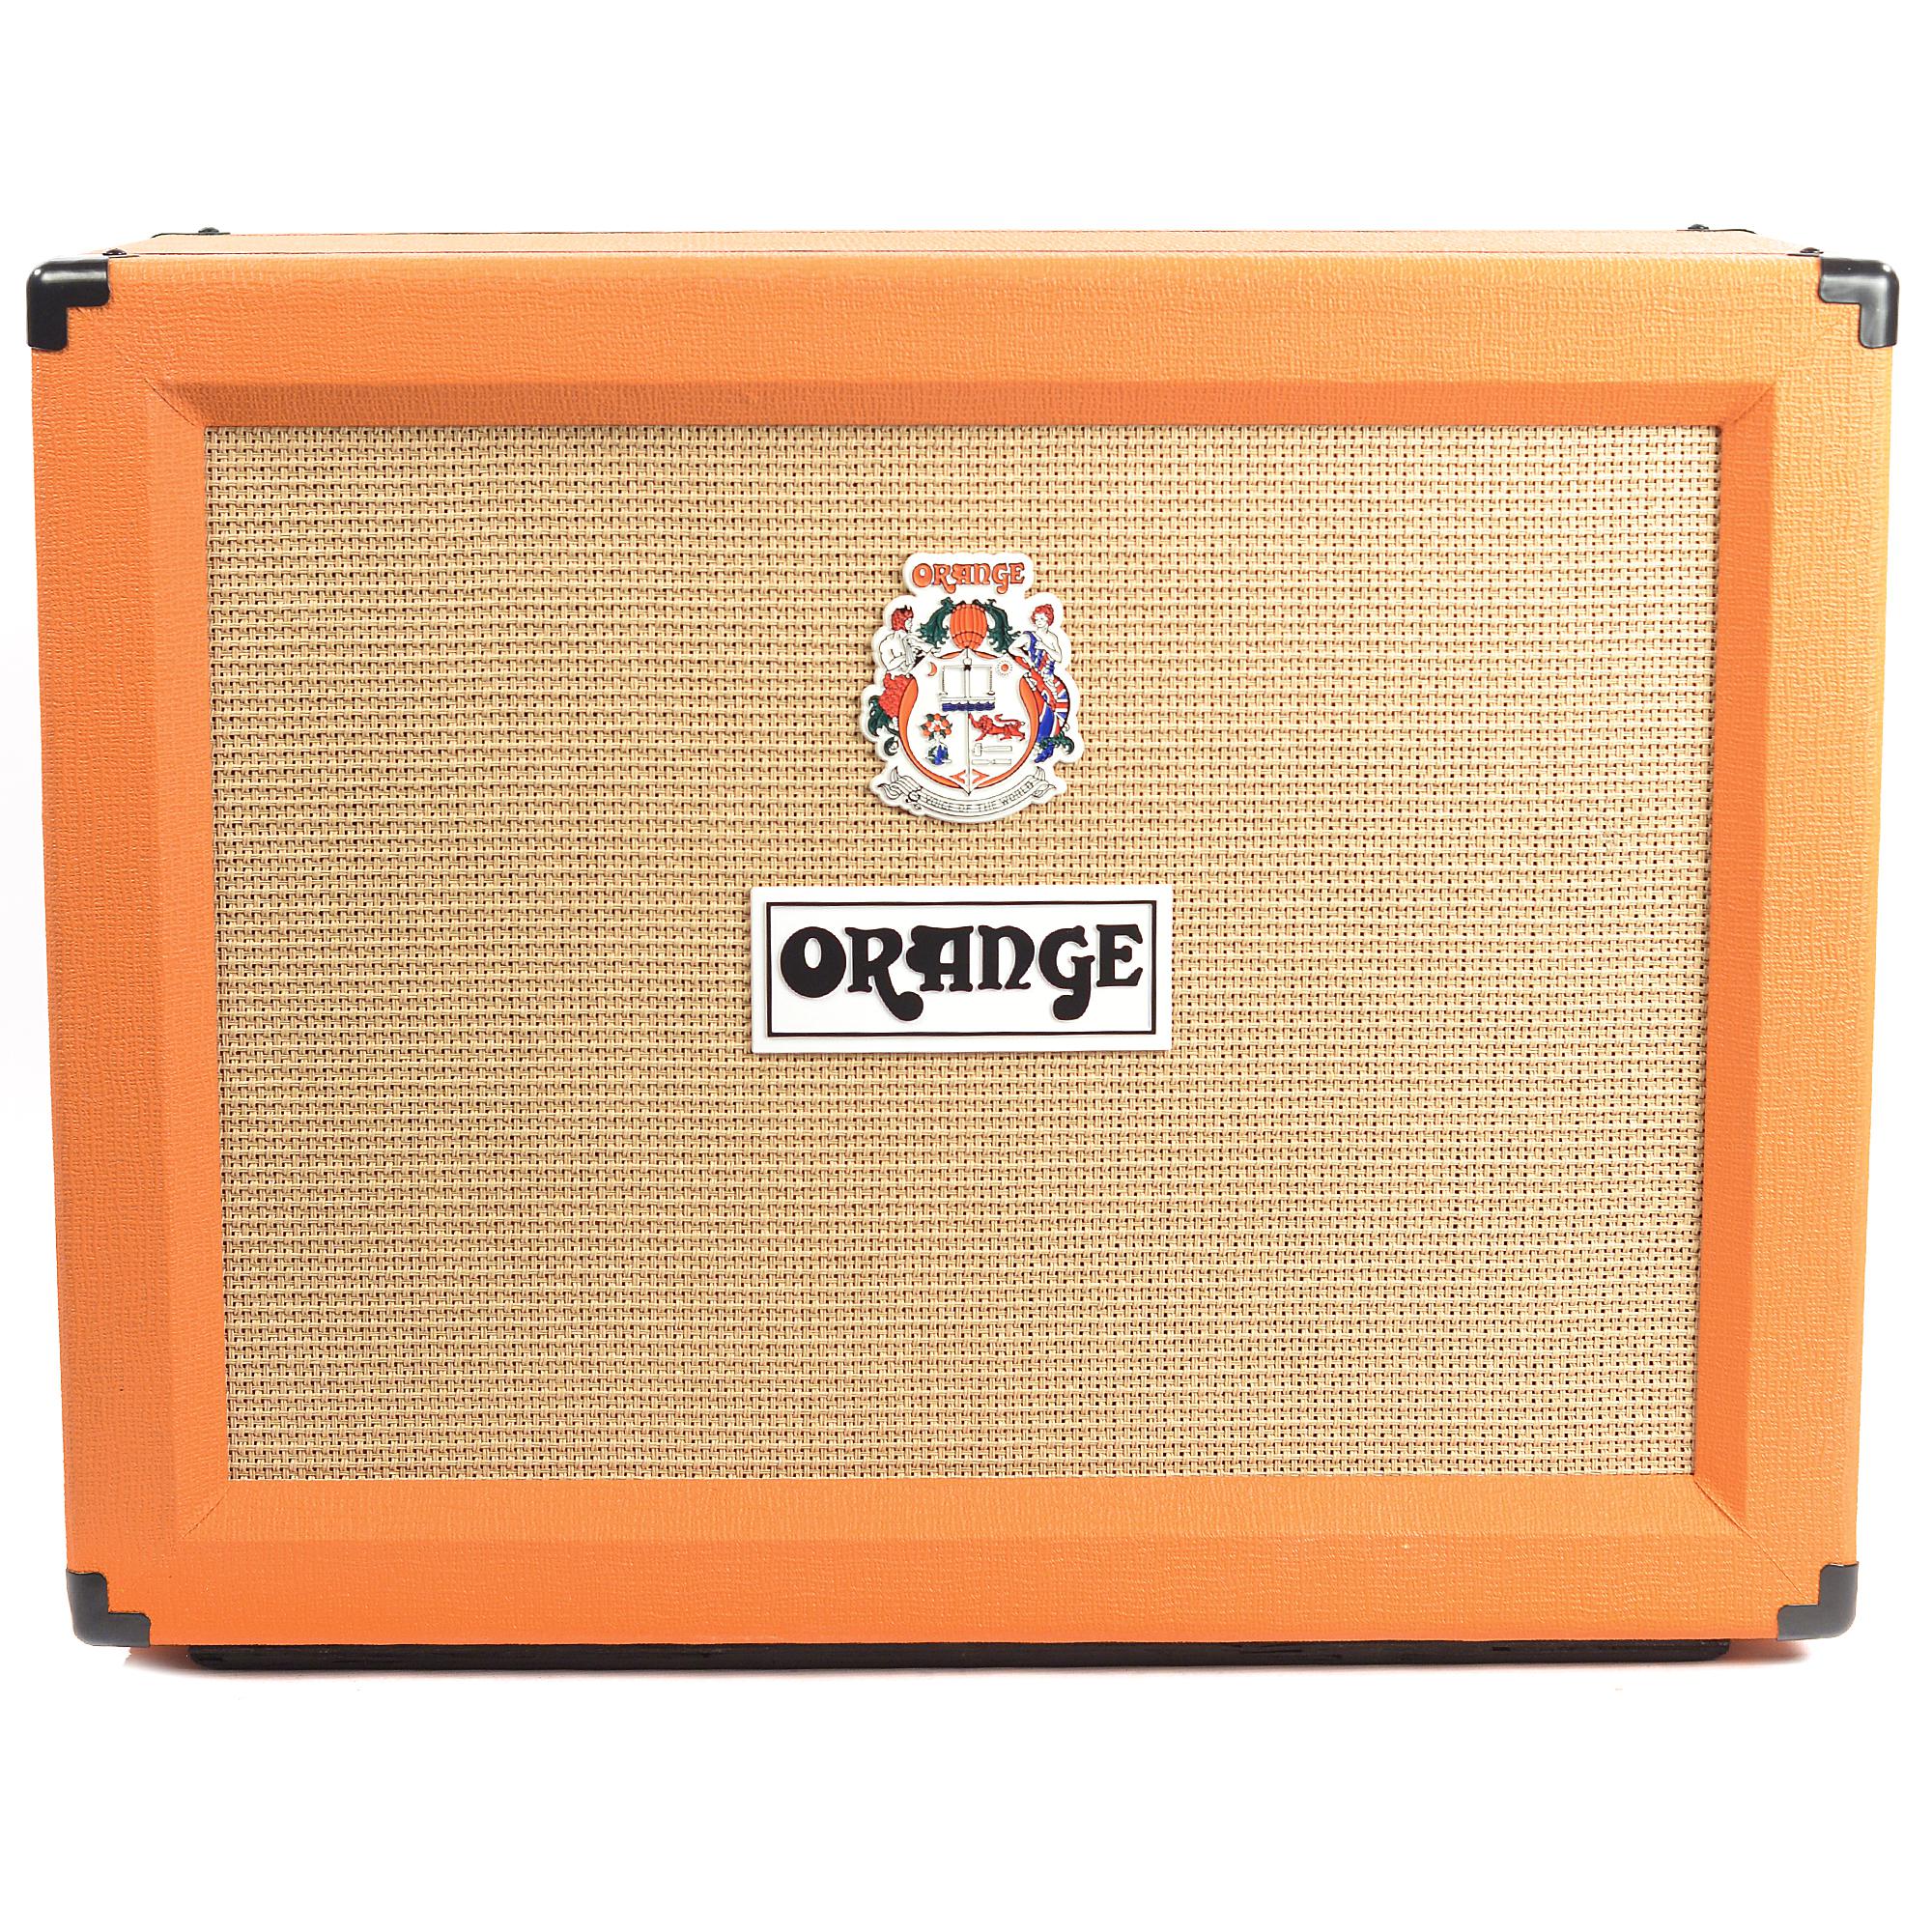 Orange - Bafle para Guitarra Eléctrica, 120 W 2 x 12 Mod.PPC212OB_47